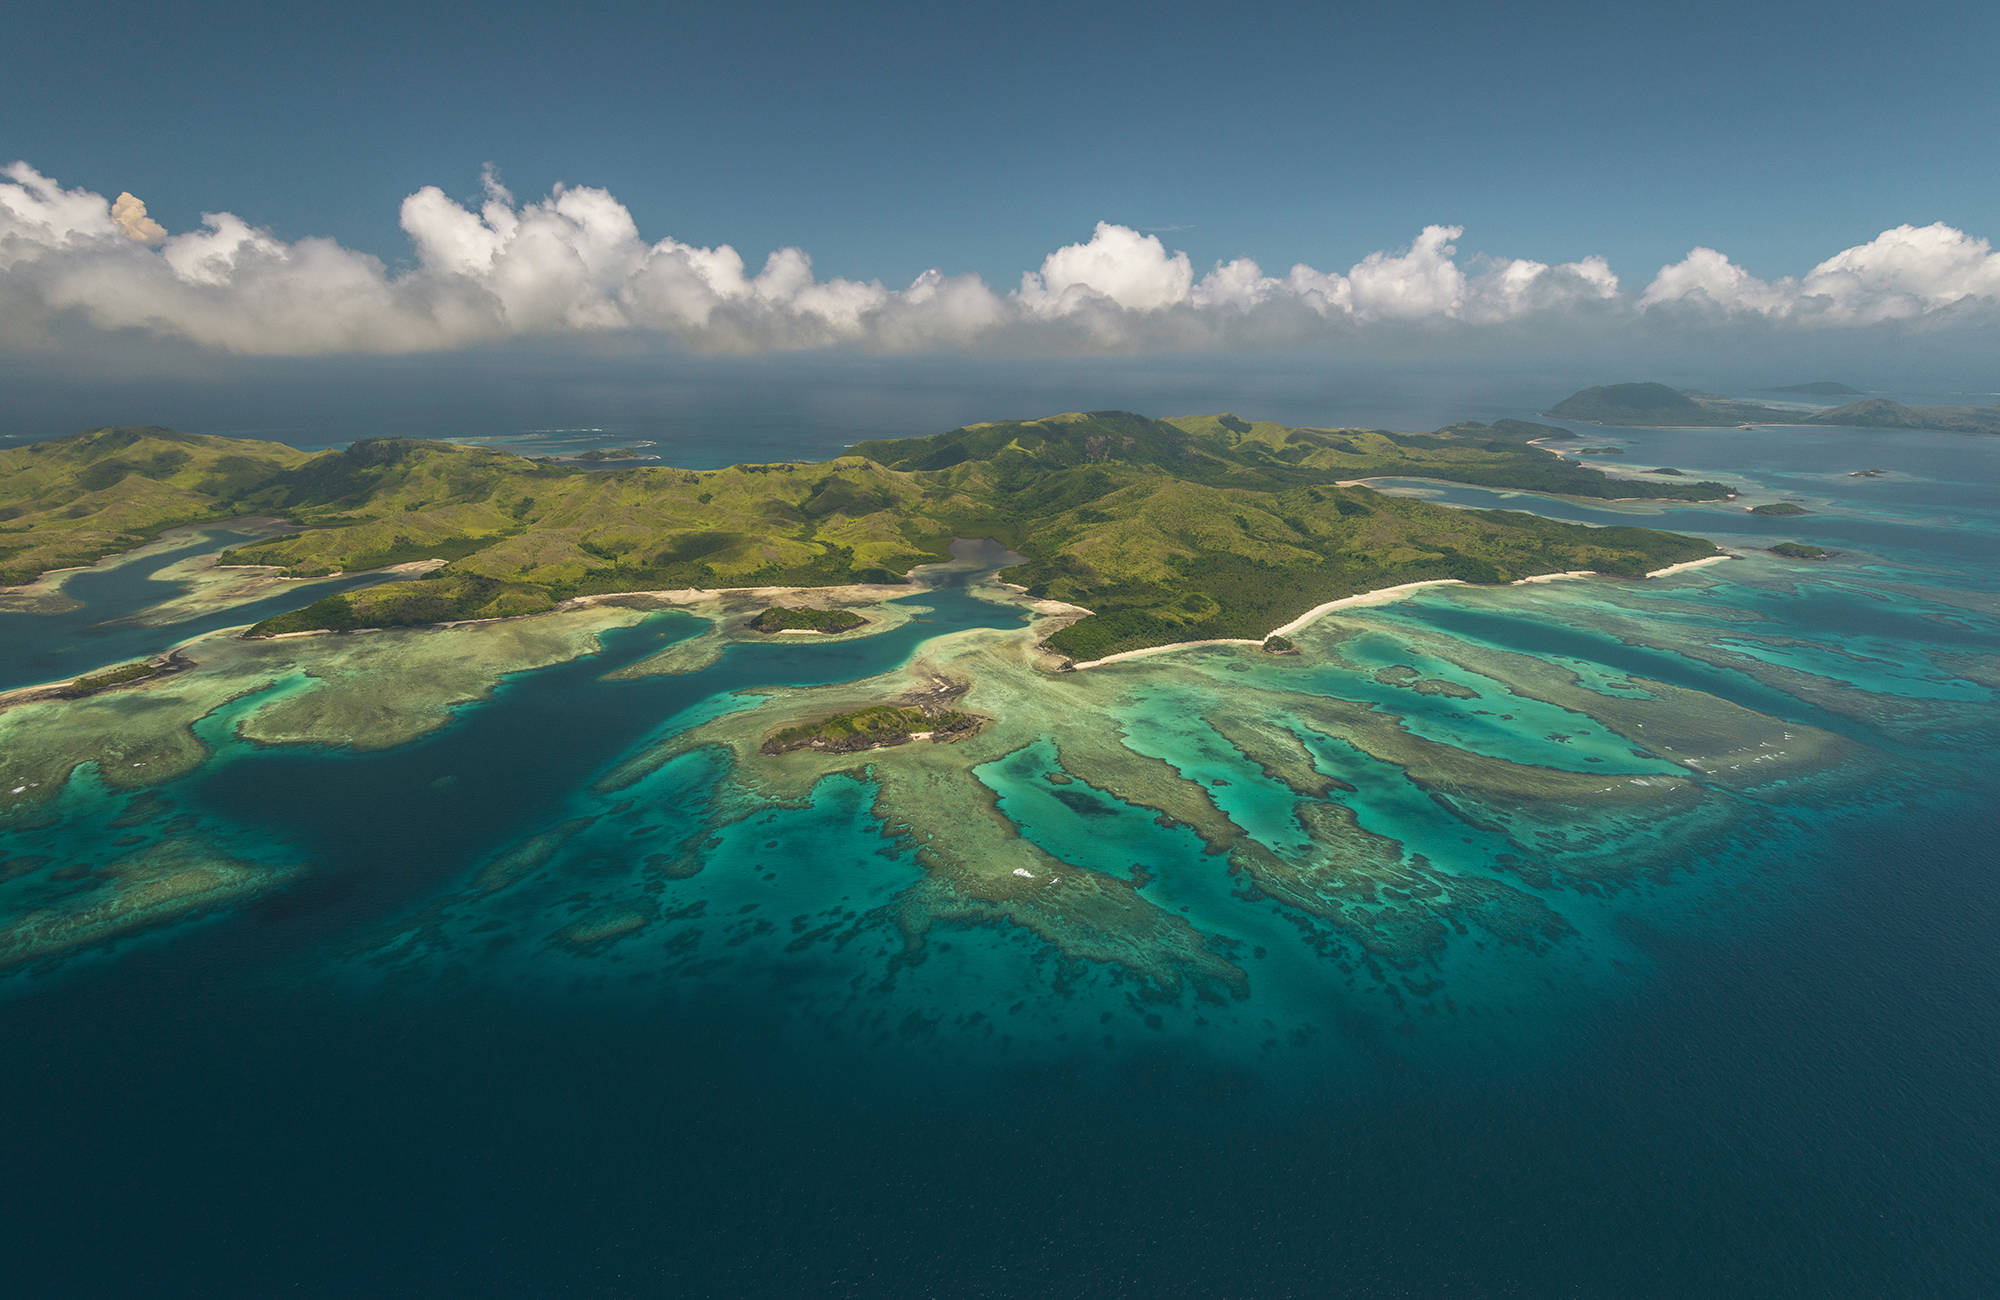 Крупнейшие архипелаги тихого океана. Фиджи риф. Архипелаг Фиджи. Табуа Фиджи. Фиджи материк.